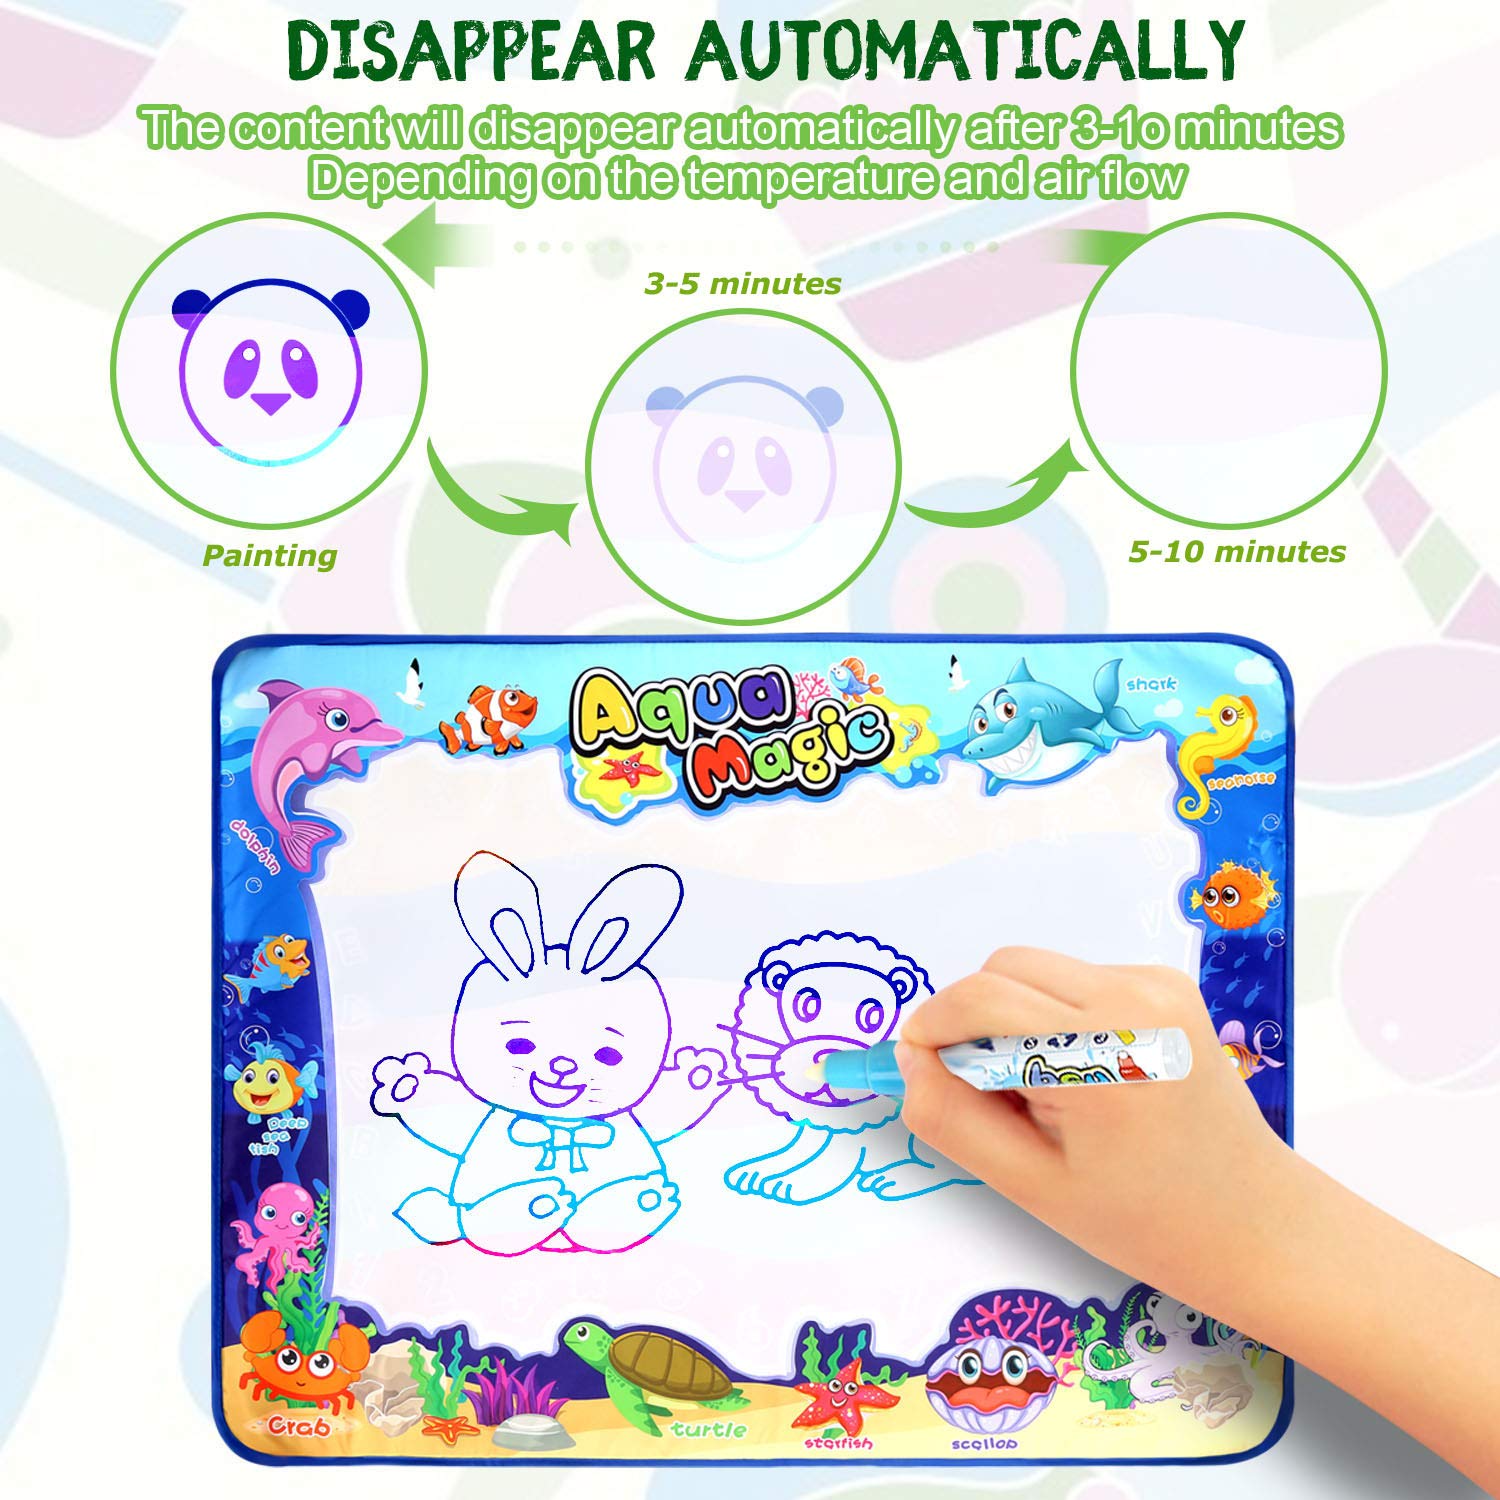 Adsoner Water Magic Mat, Aqua Drawing Magic Mat, Water Painting Doodle Mat with 4 Magic Pens Developmental Educational Toys for Toddlers Kids (40 X 32 Inches)